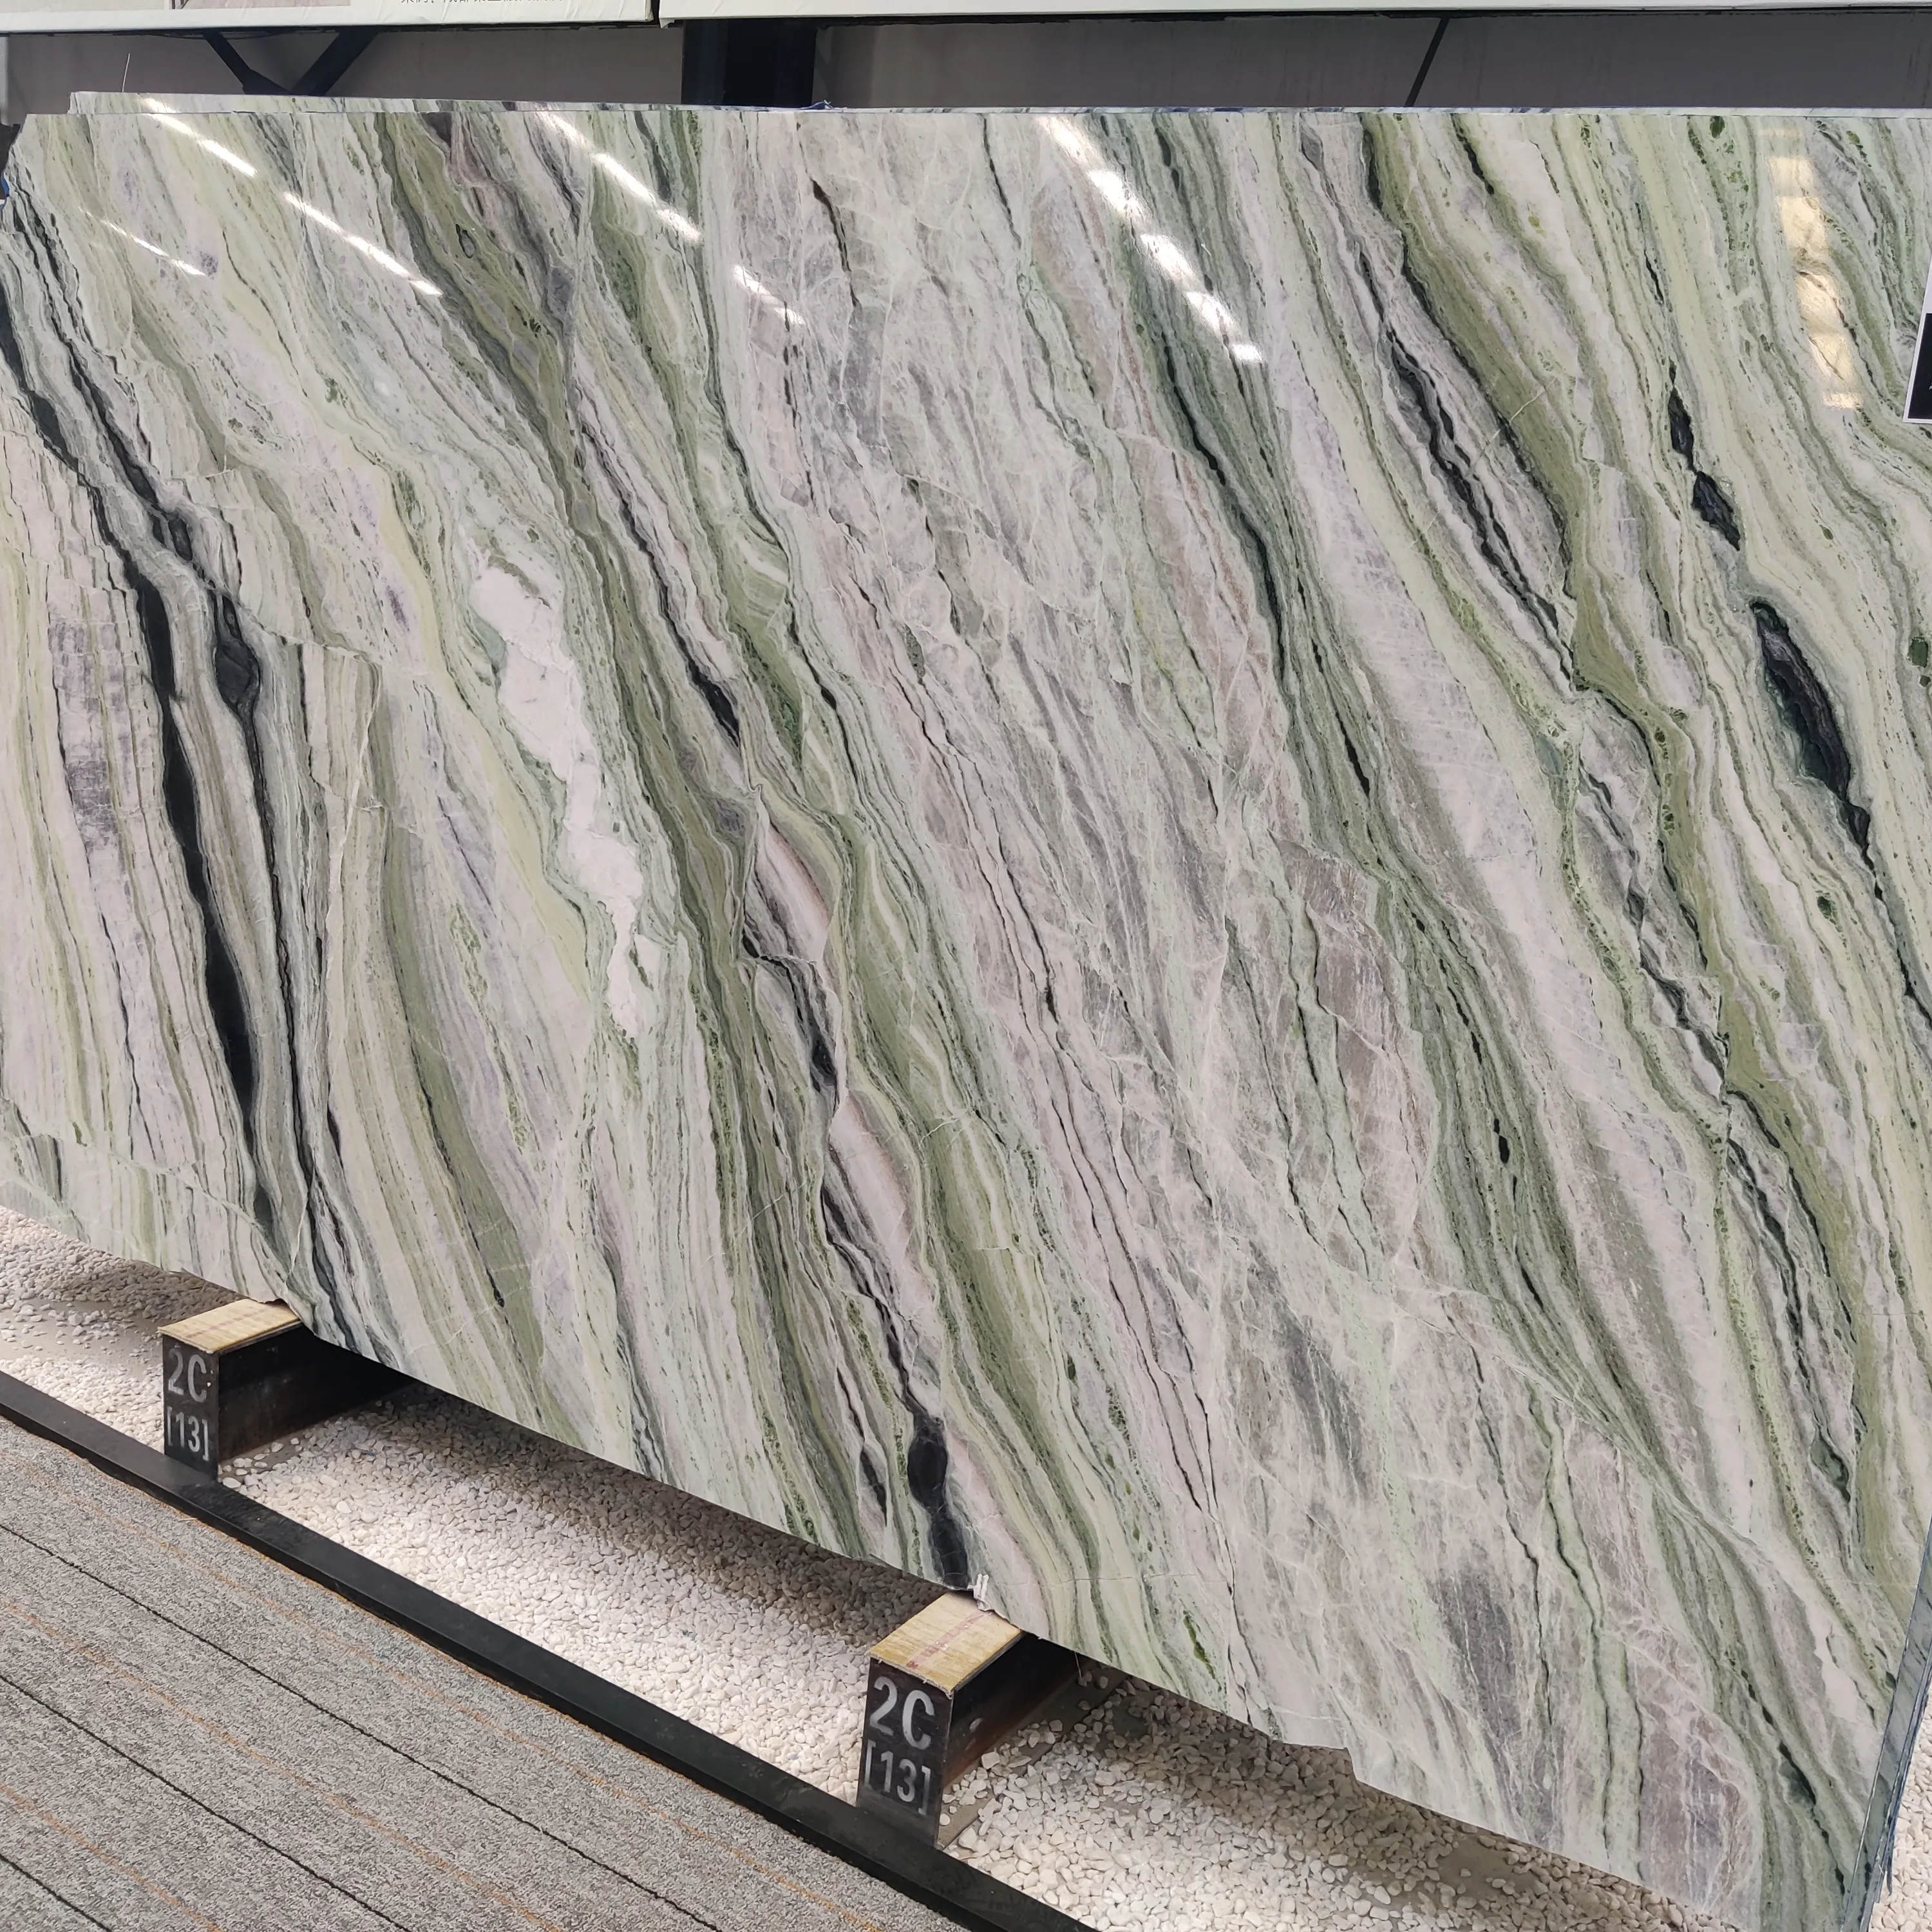 Shangri-La jade green marble dining table countertop wall floor decor stone